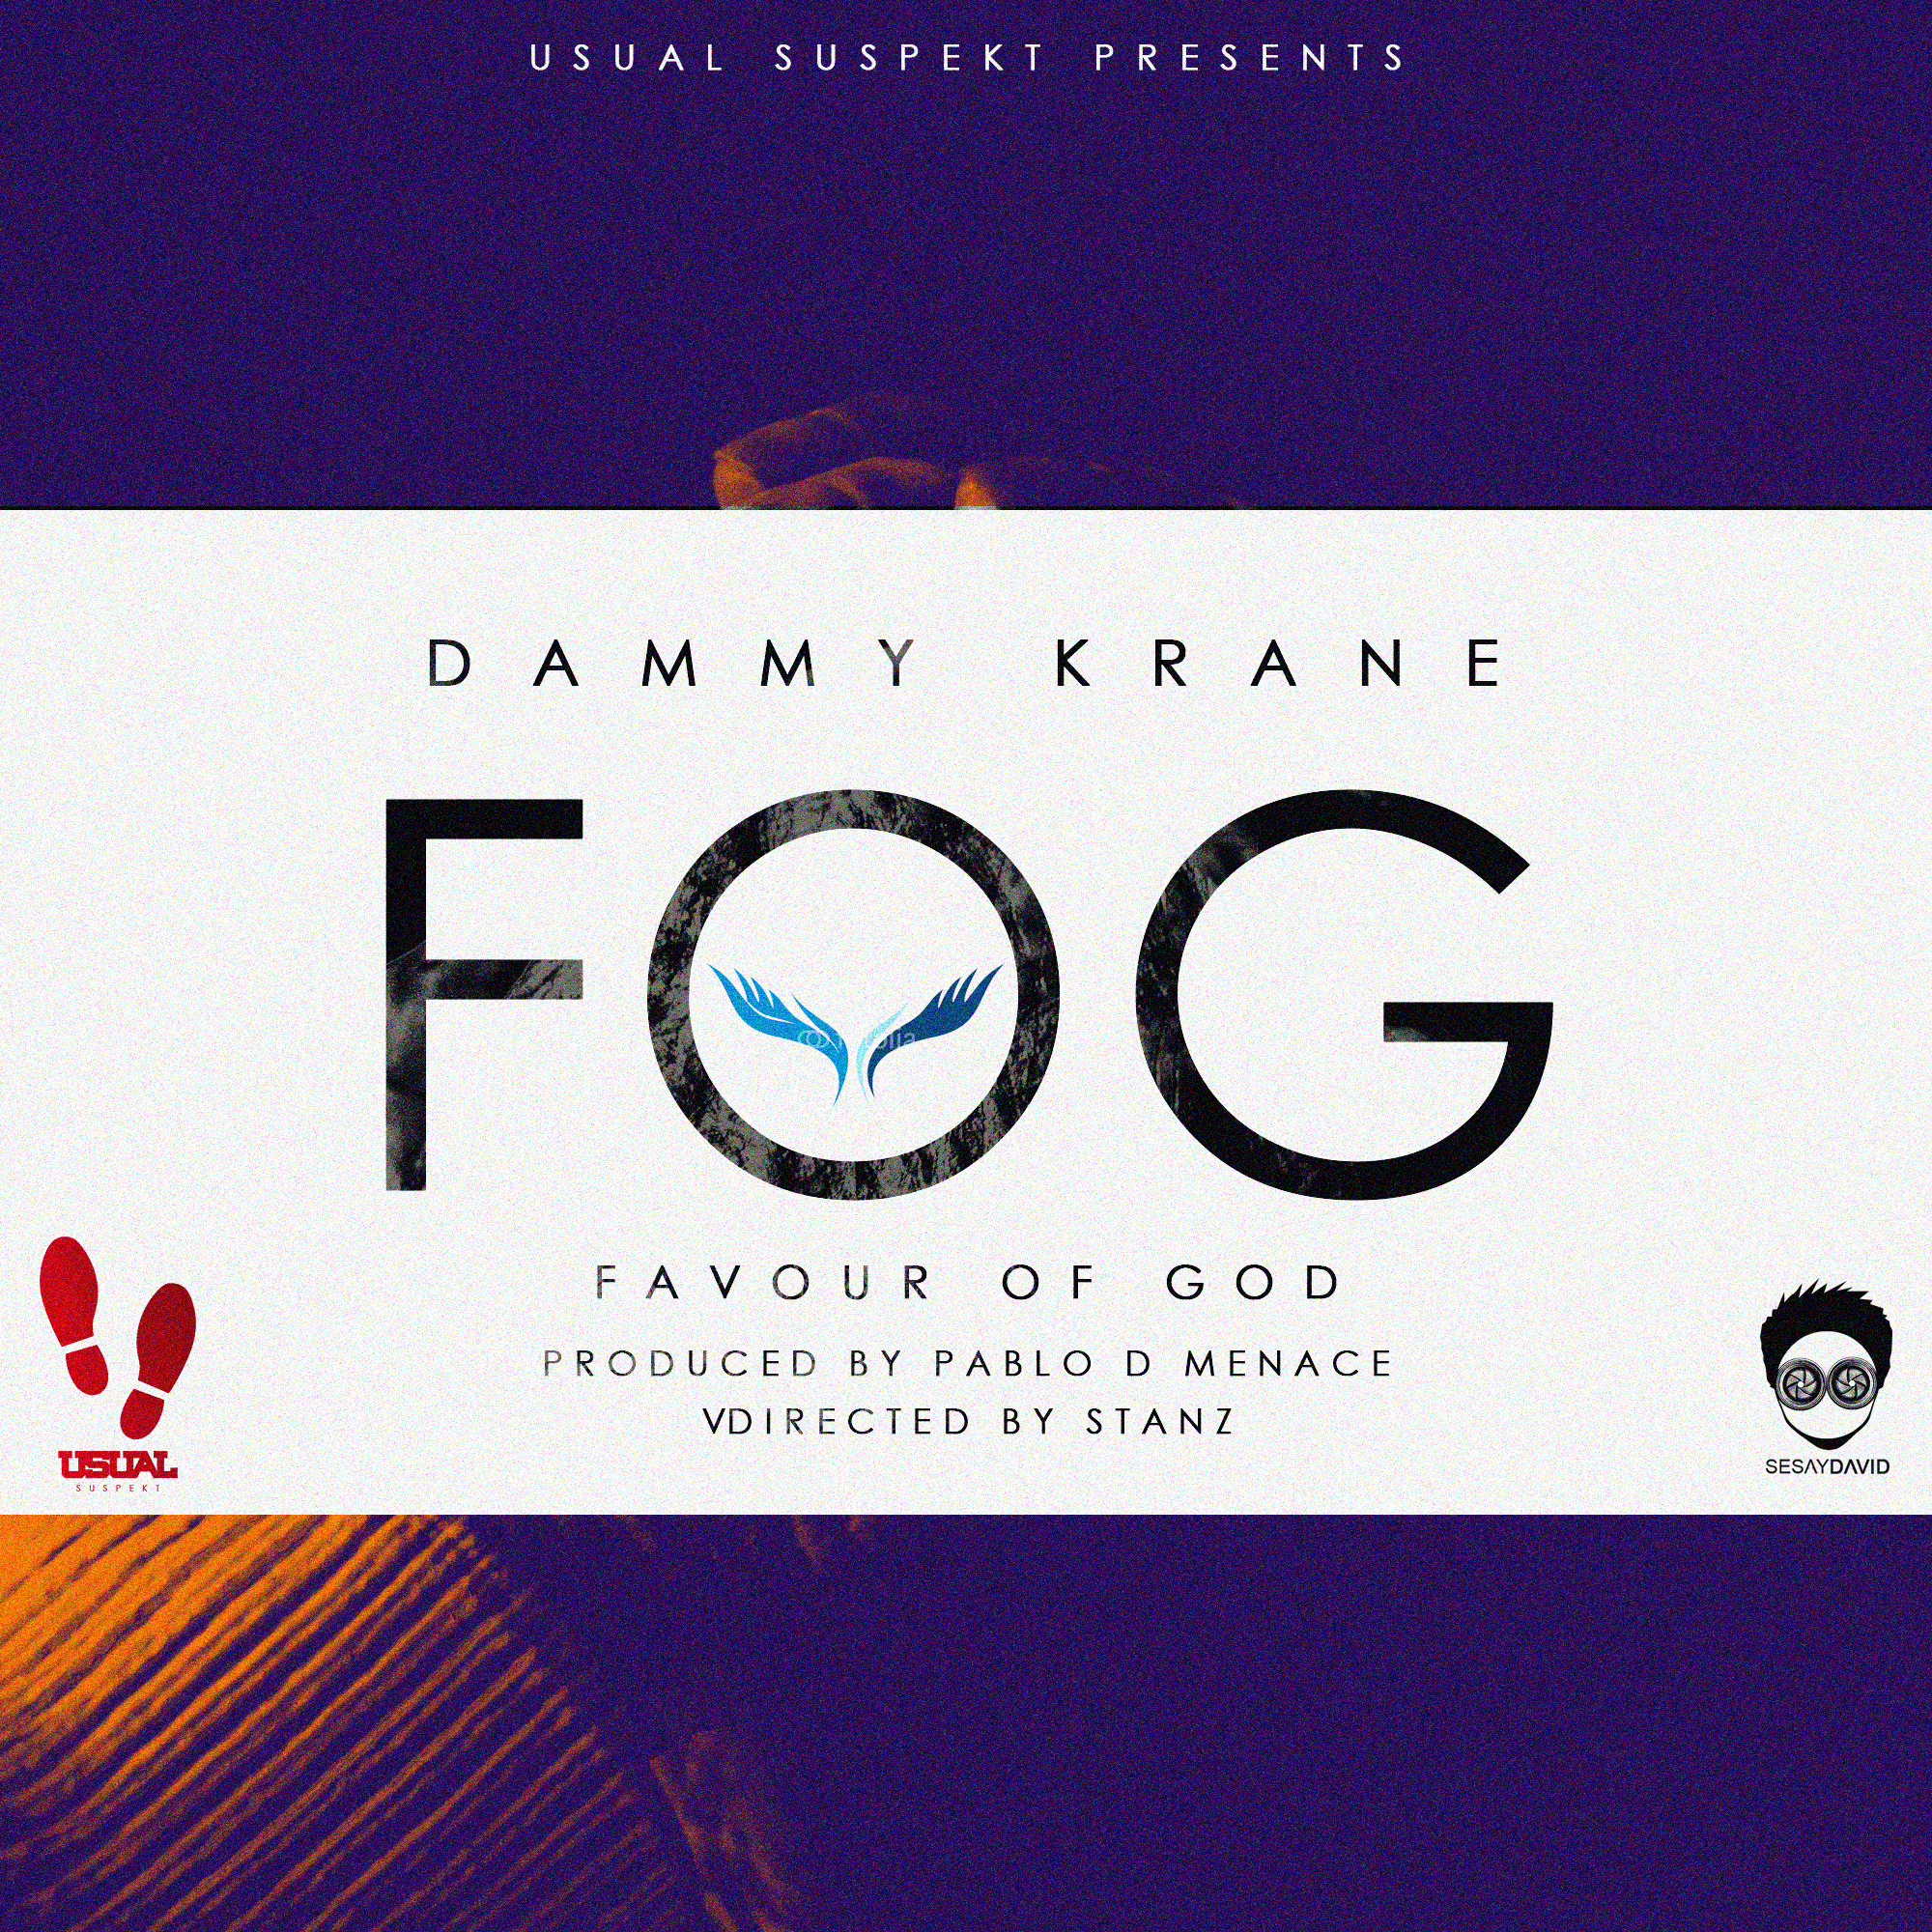 VIDEO: Dammy Krane - Favour of God (F.O.G)